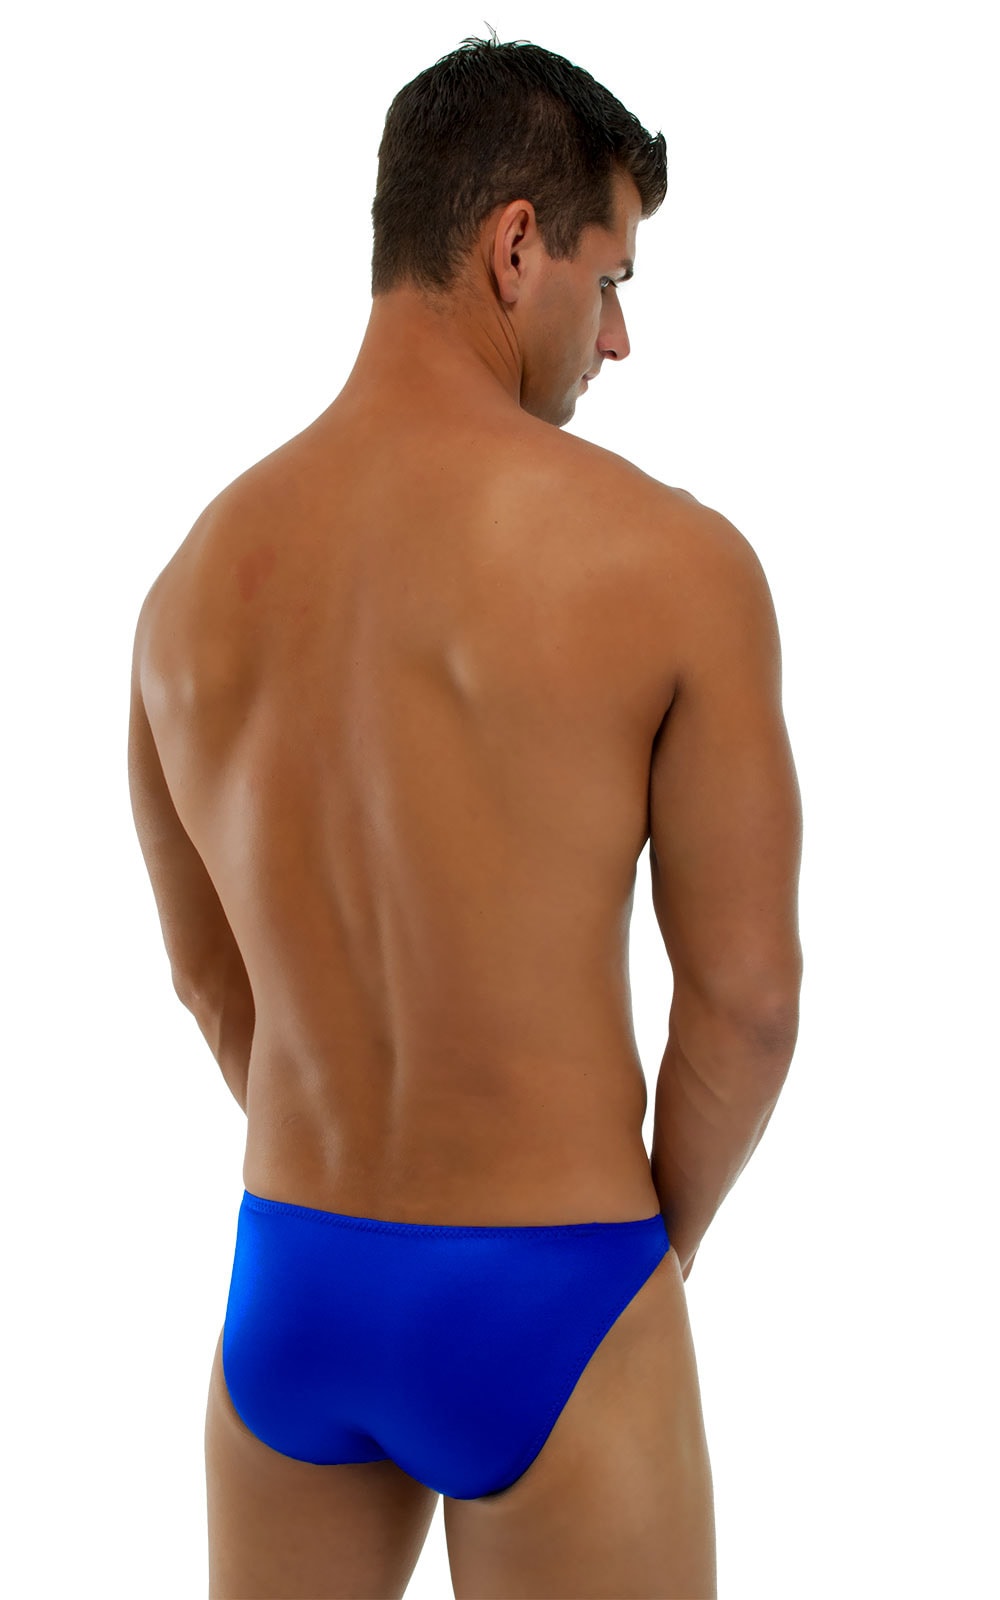 Bikini-Brief Swimsuit in Wet Look Royal Blue, Rear View